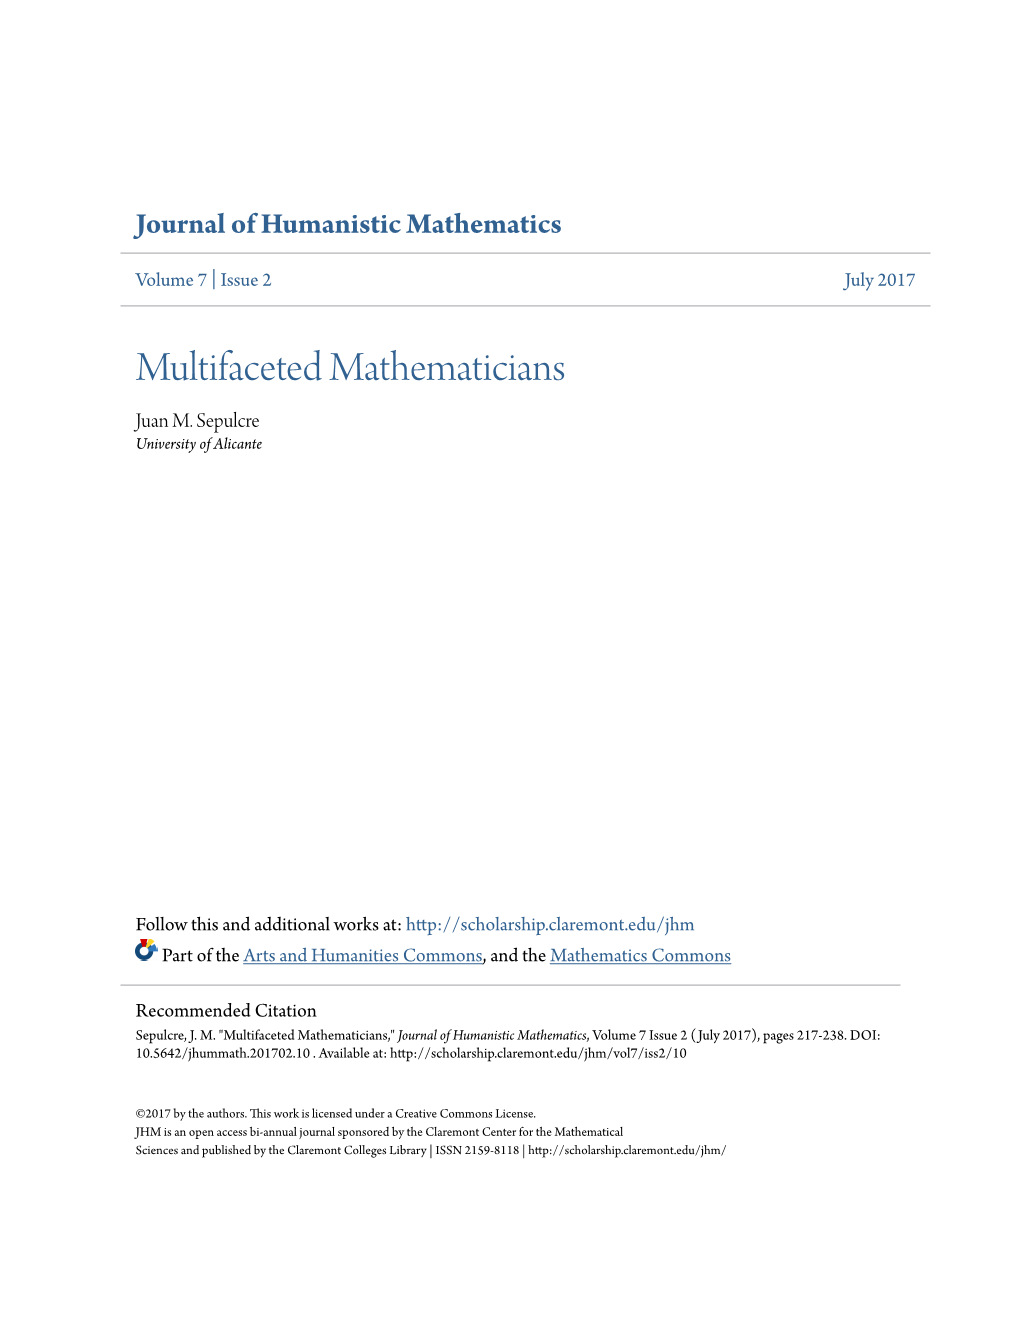 Multifaceted Mathematicians Juan M